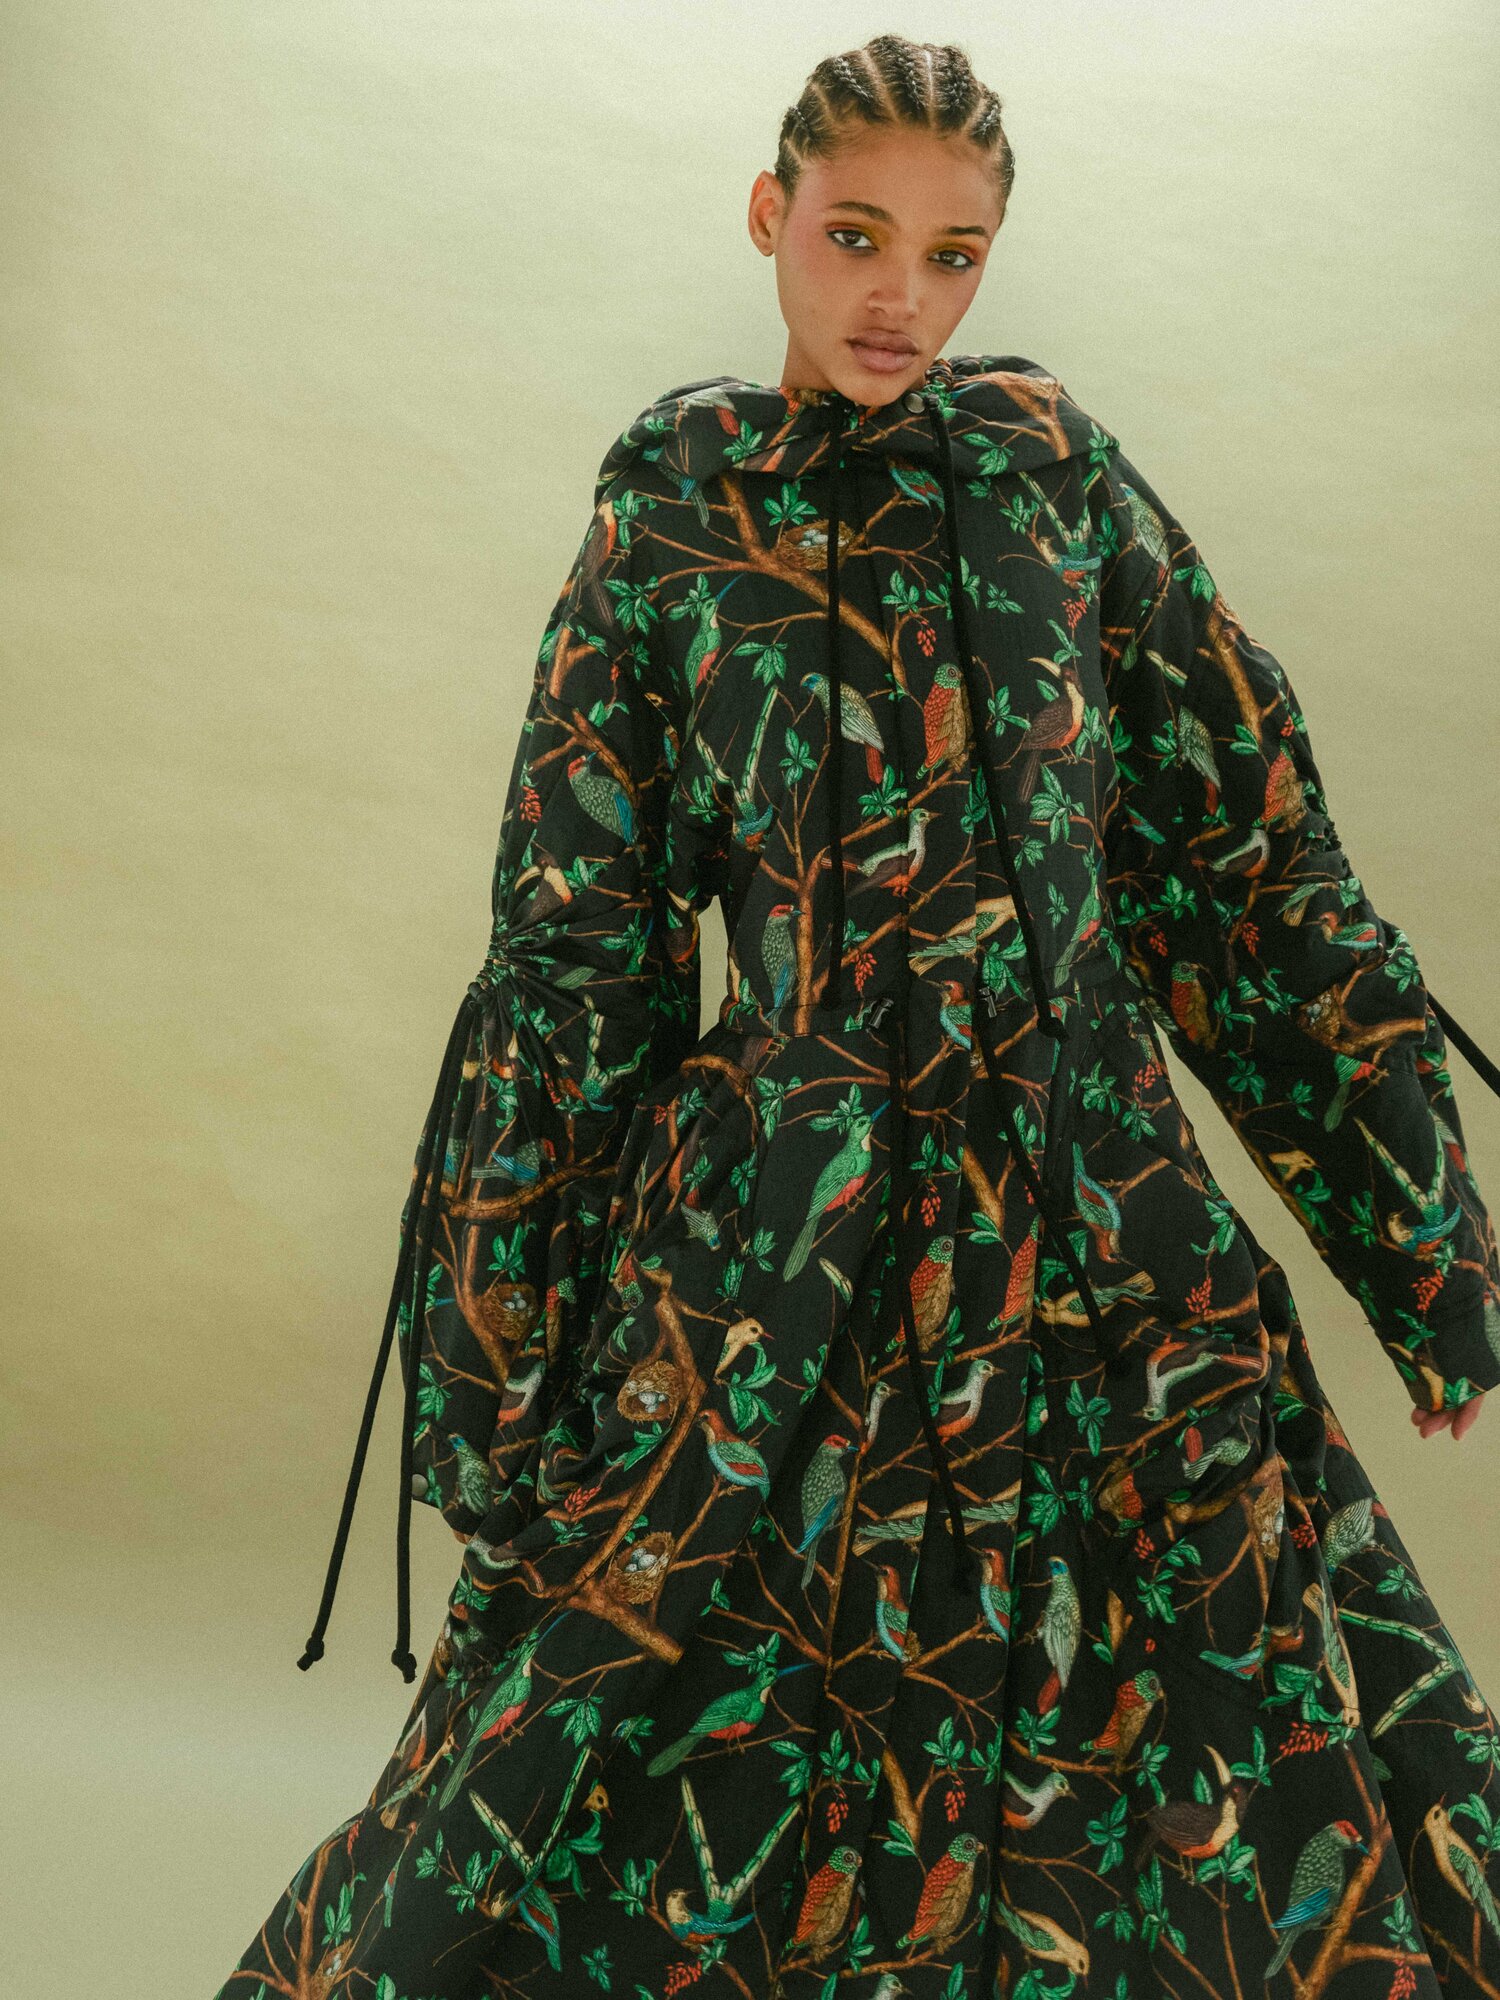 Damien Fry for Fashionography x KENZO with Aya Jones - Fashion Editorials